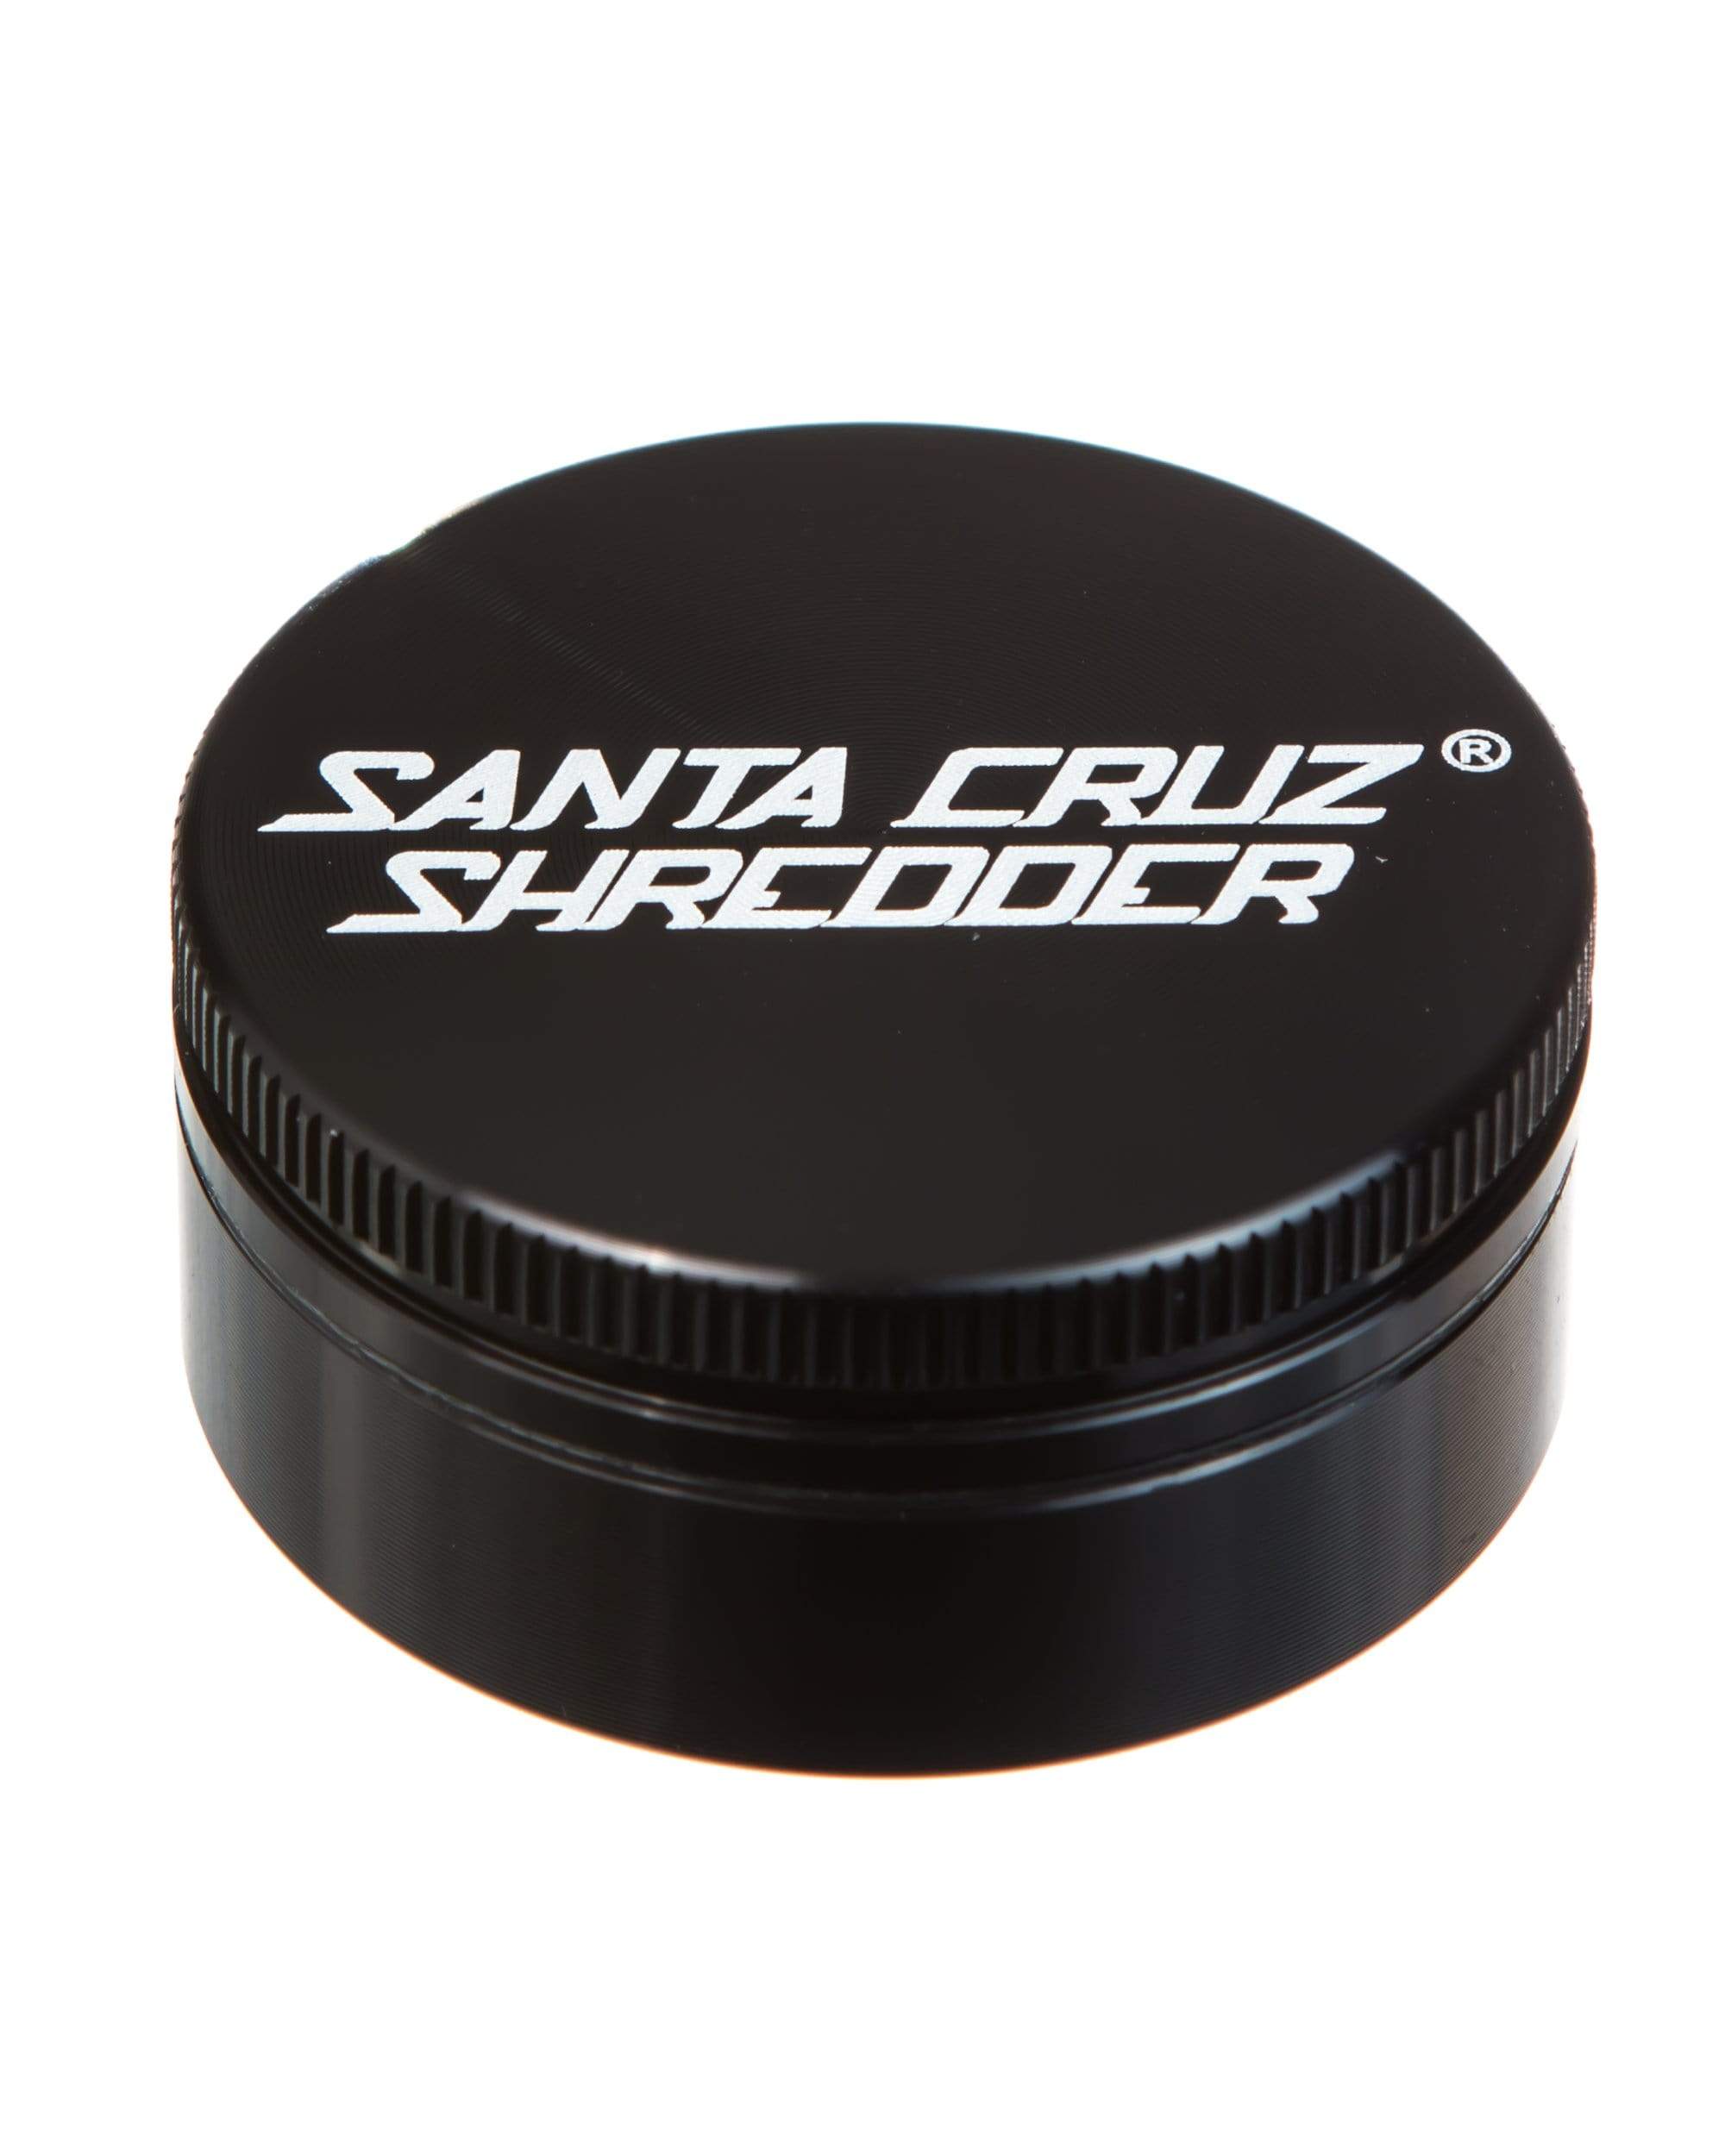 Santa Cruz Shredder Black / 1-5/8" grinder